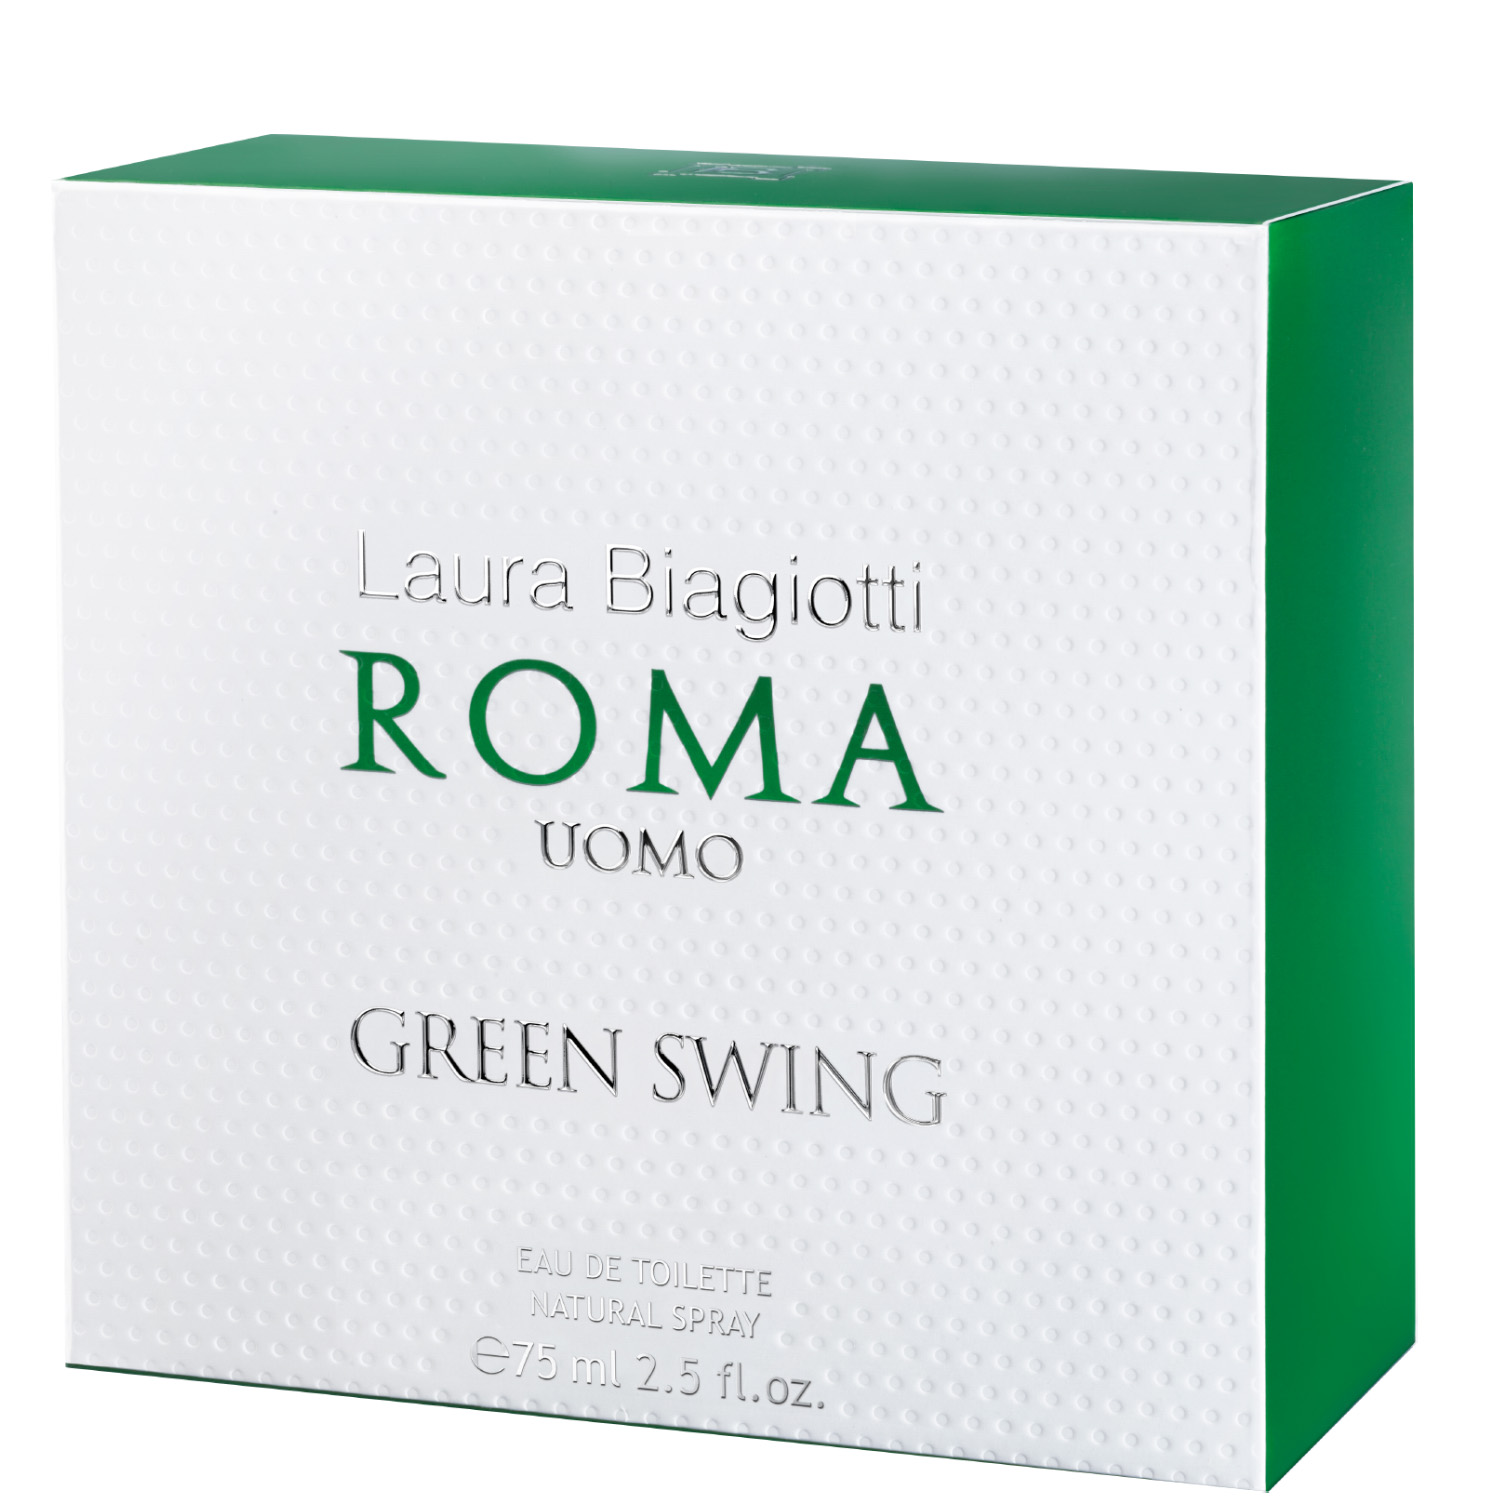 Laura Biagiotti Roma Uomo Green Swing Eau de Toilette 75ml